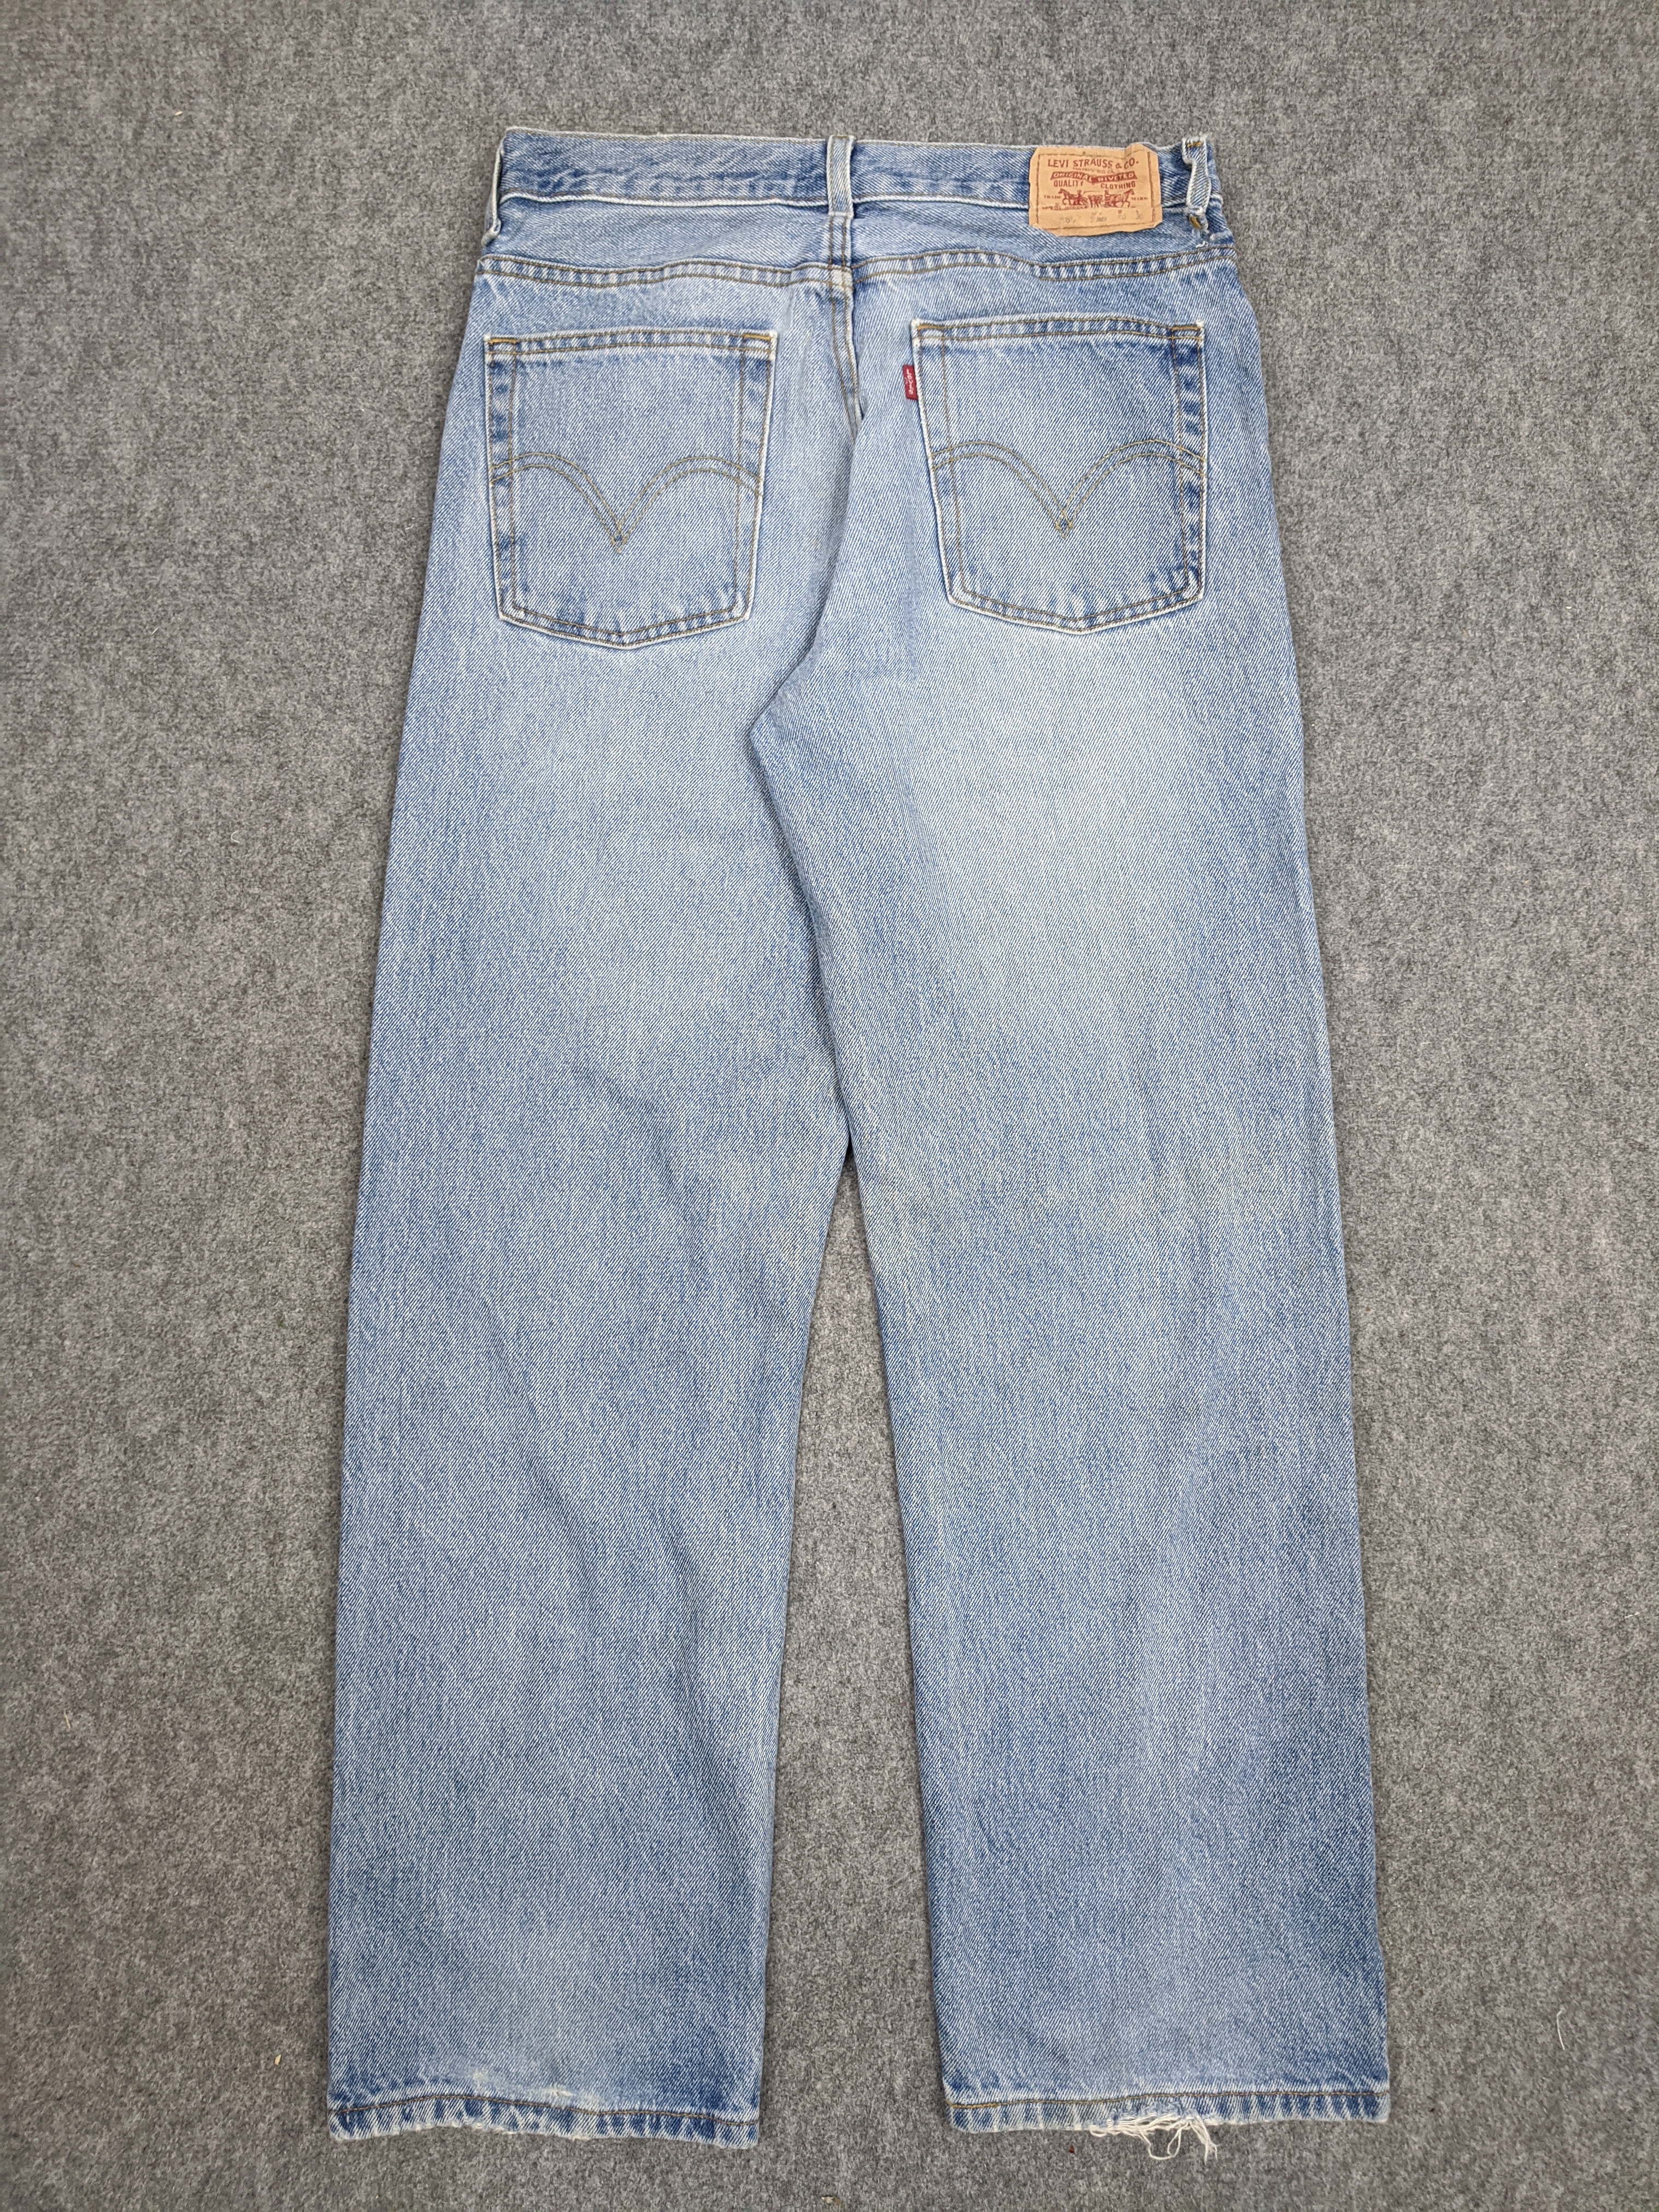 Vintage - Vintage Levis 569 Jeans - 3